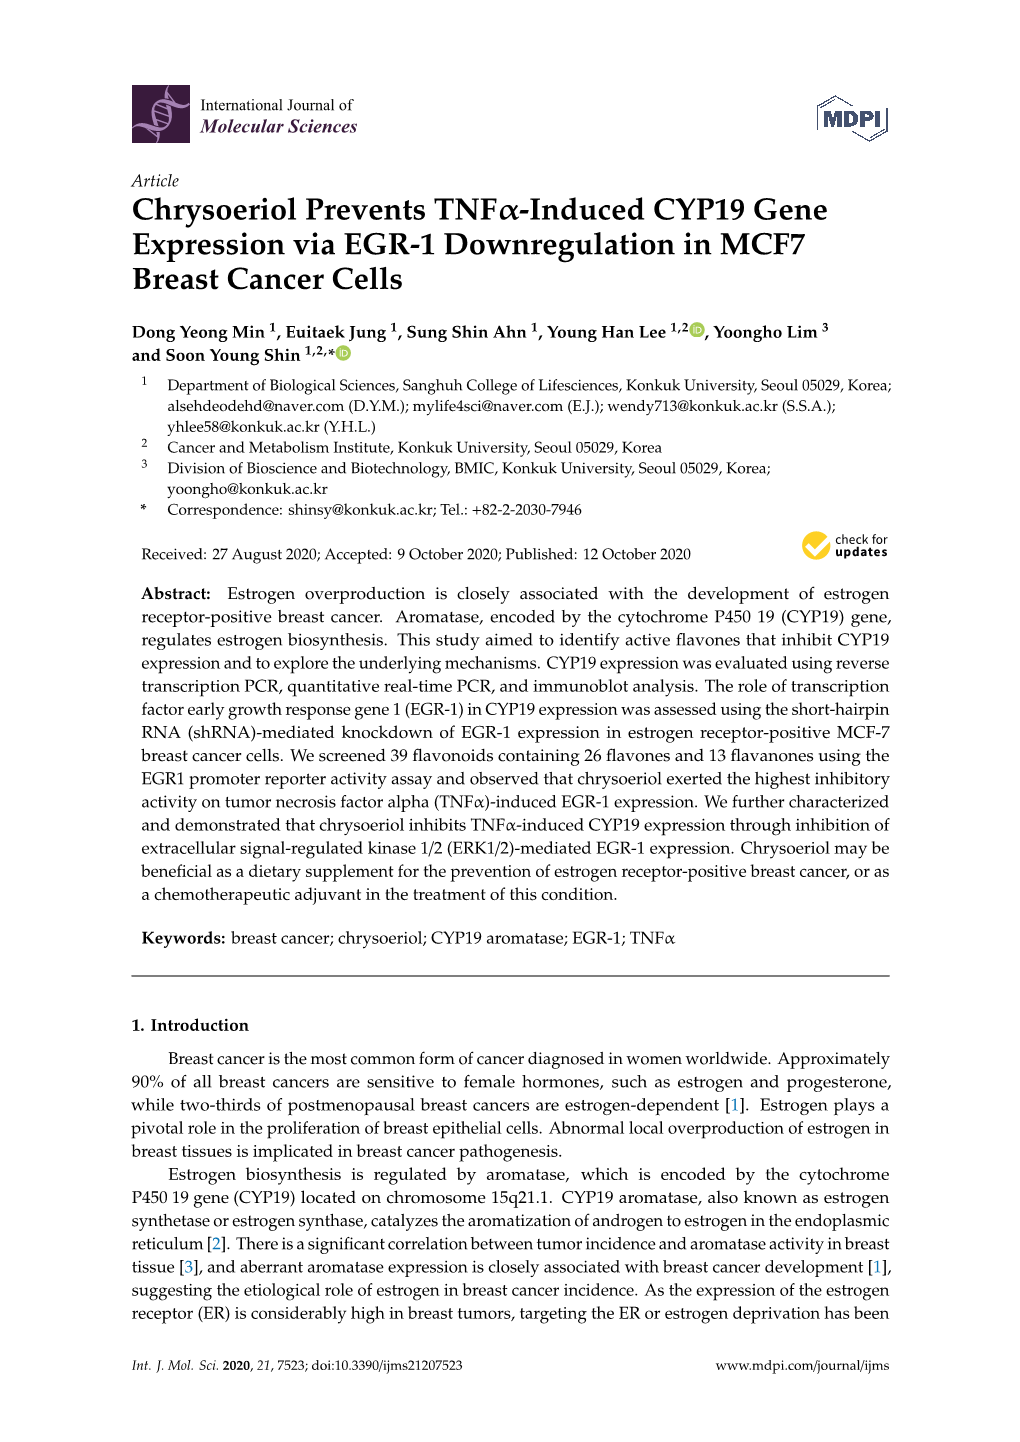 Chrysoeriol Prevents TNF-Induced CYP19 Gene Expression Via EGR-1